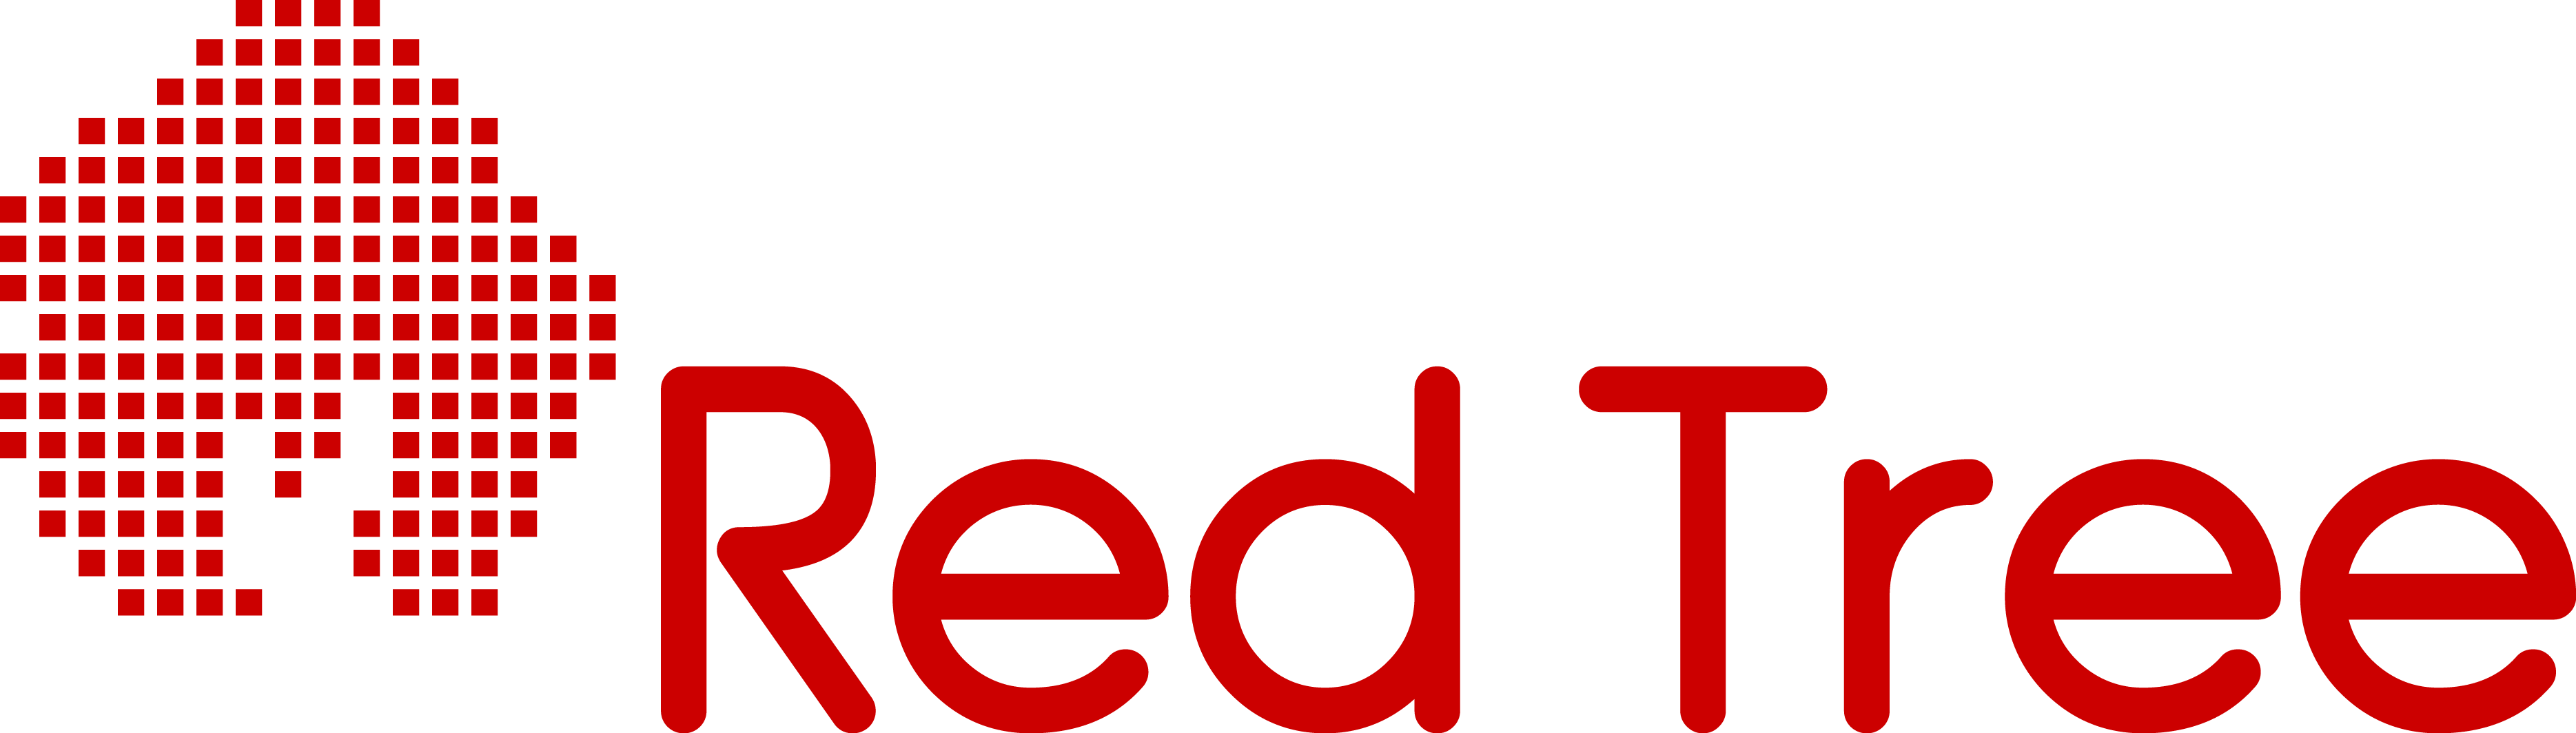 Red Tree Logo - Full Service Digital Agency Jakarta, Indonesia | Red Tree Asia